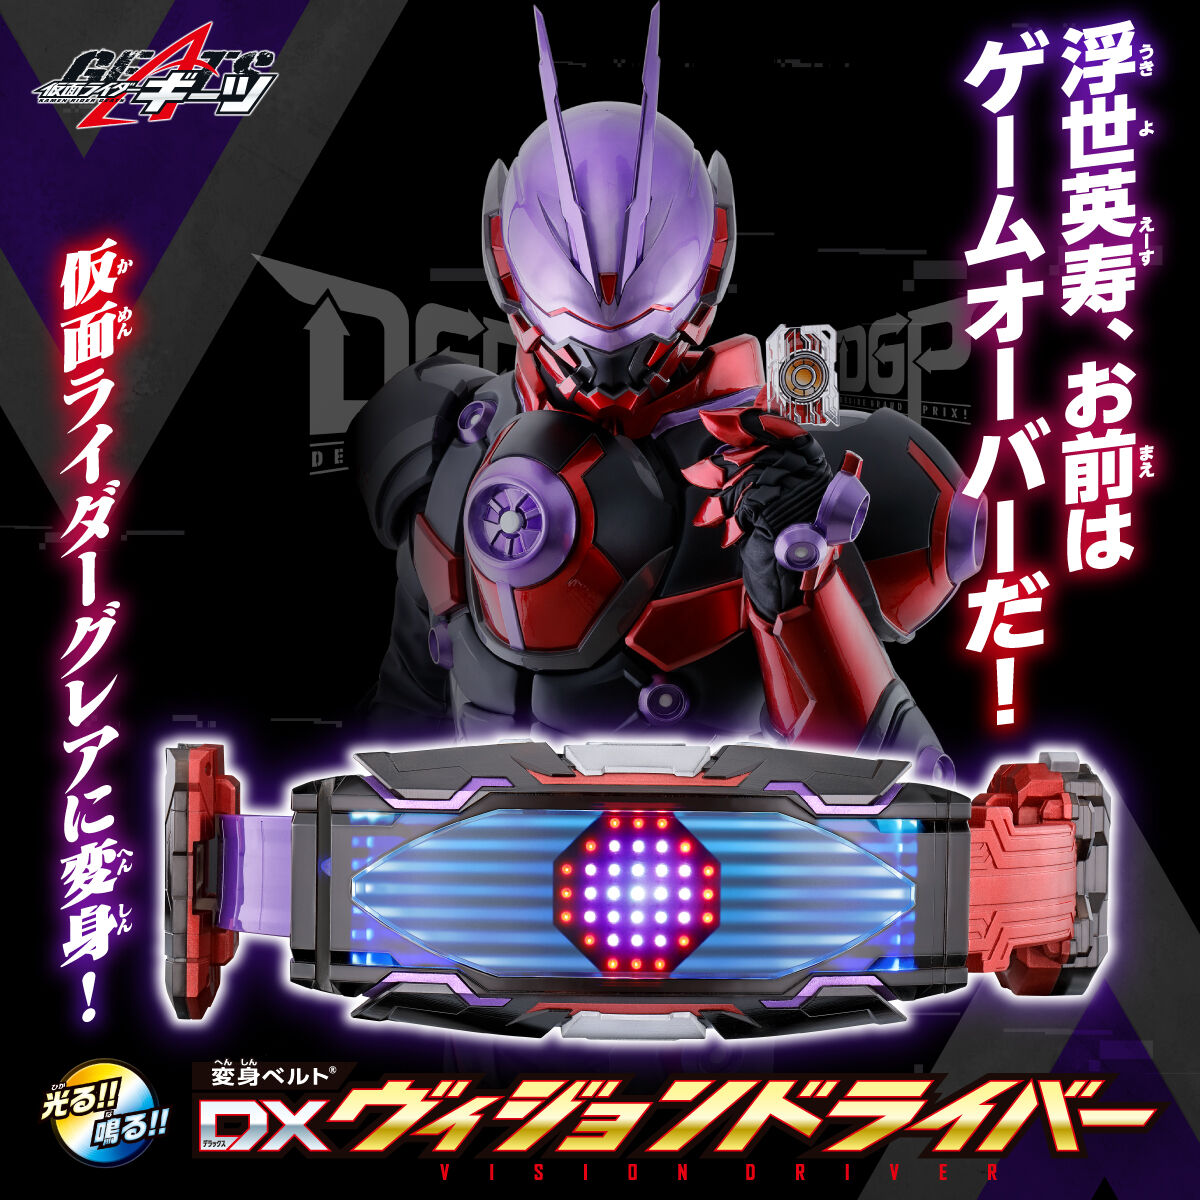 DX Vision Driver (Reissue)